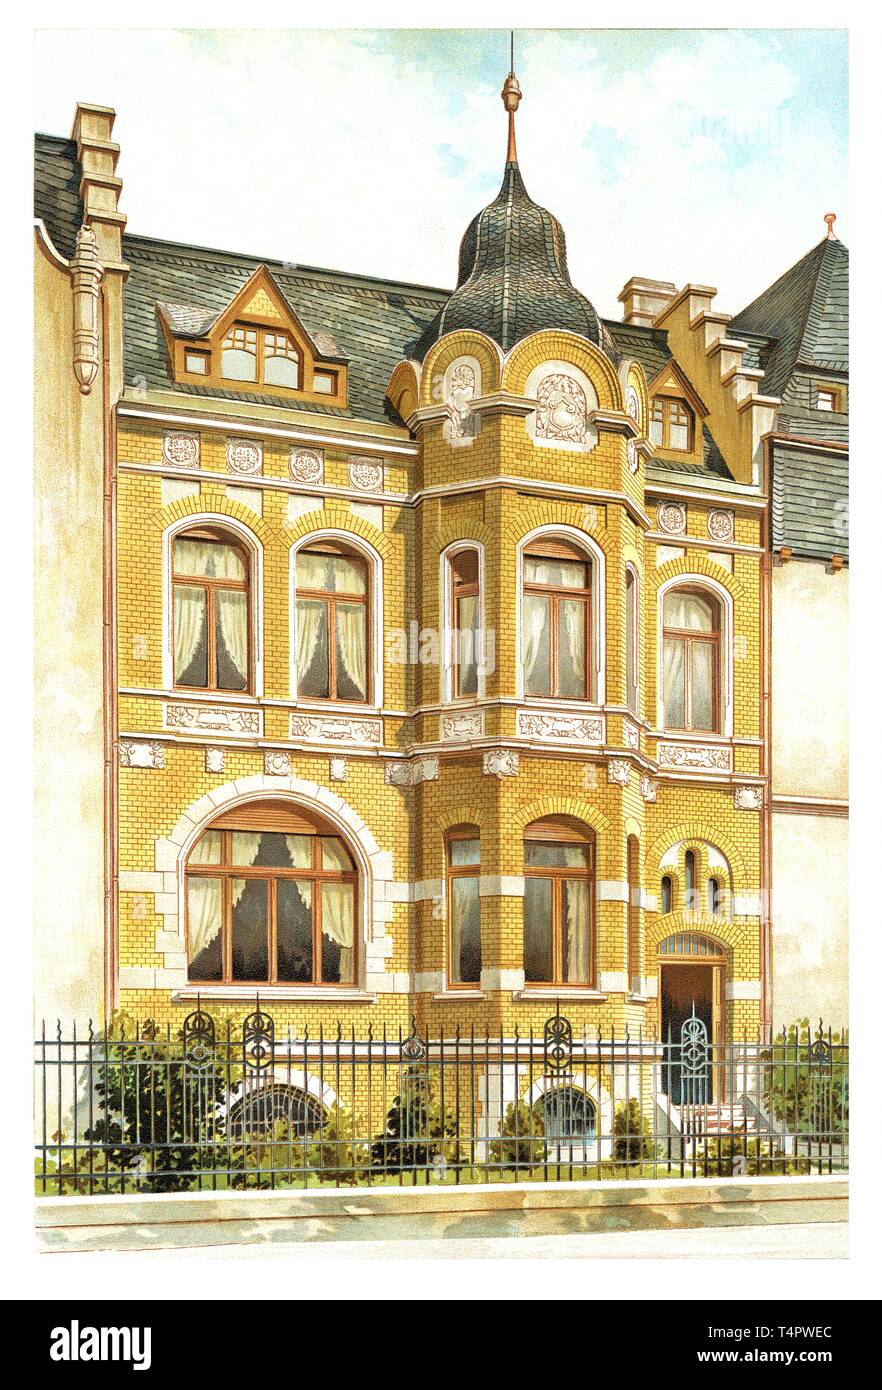 Residential House at Stuttgart, Germany - vintage engraved illustration. From Modern Urban Houses, 1905 Stock Photo